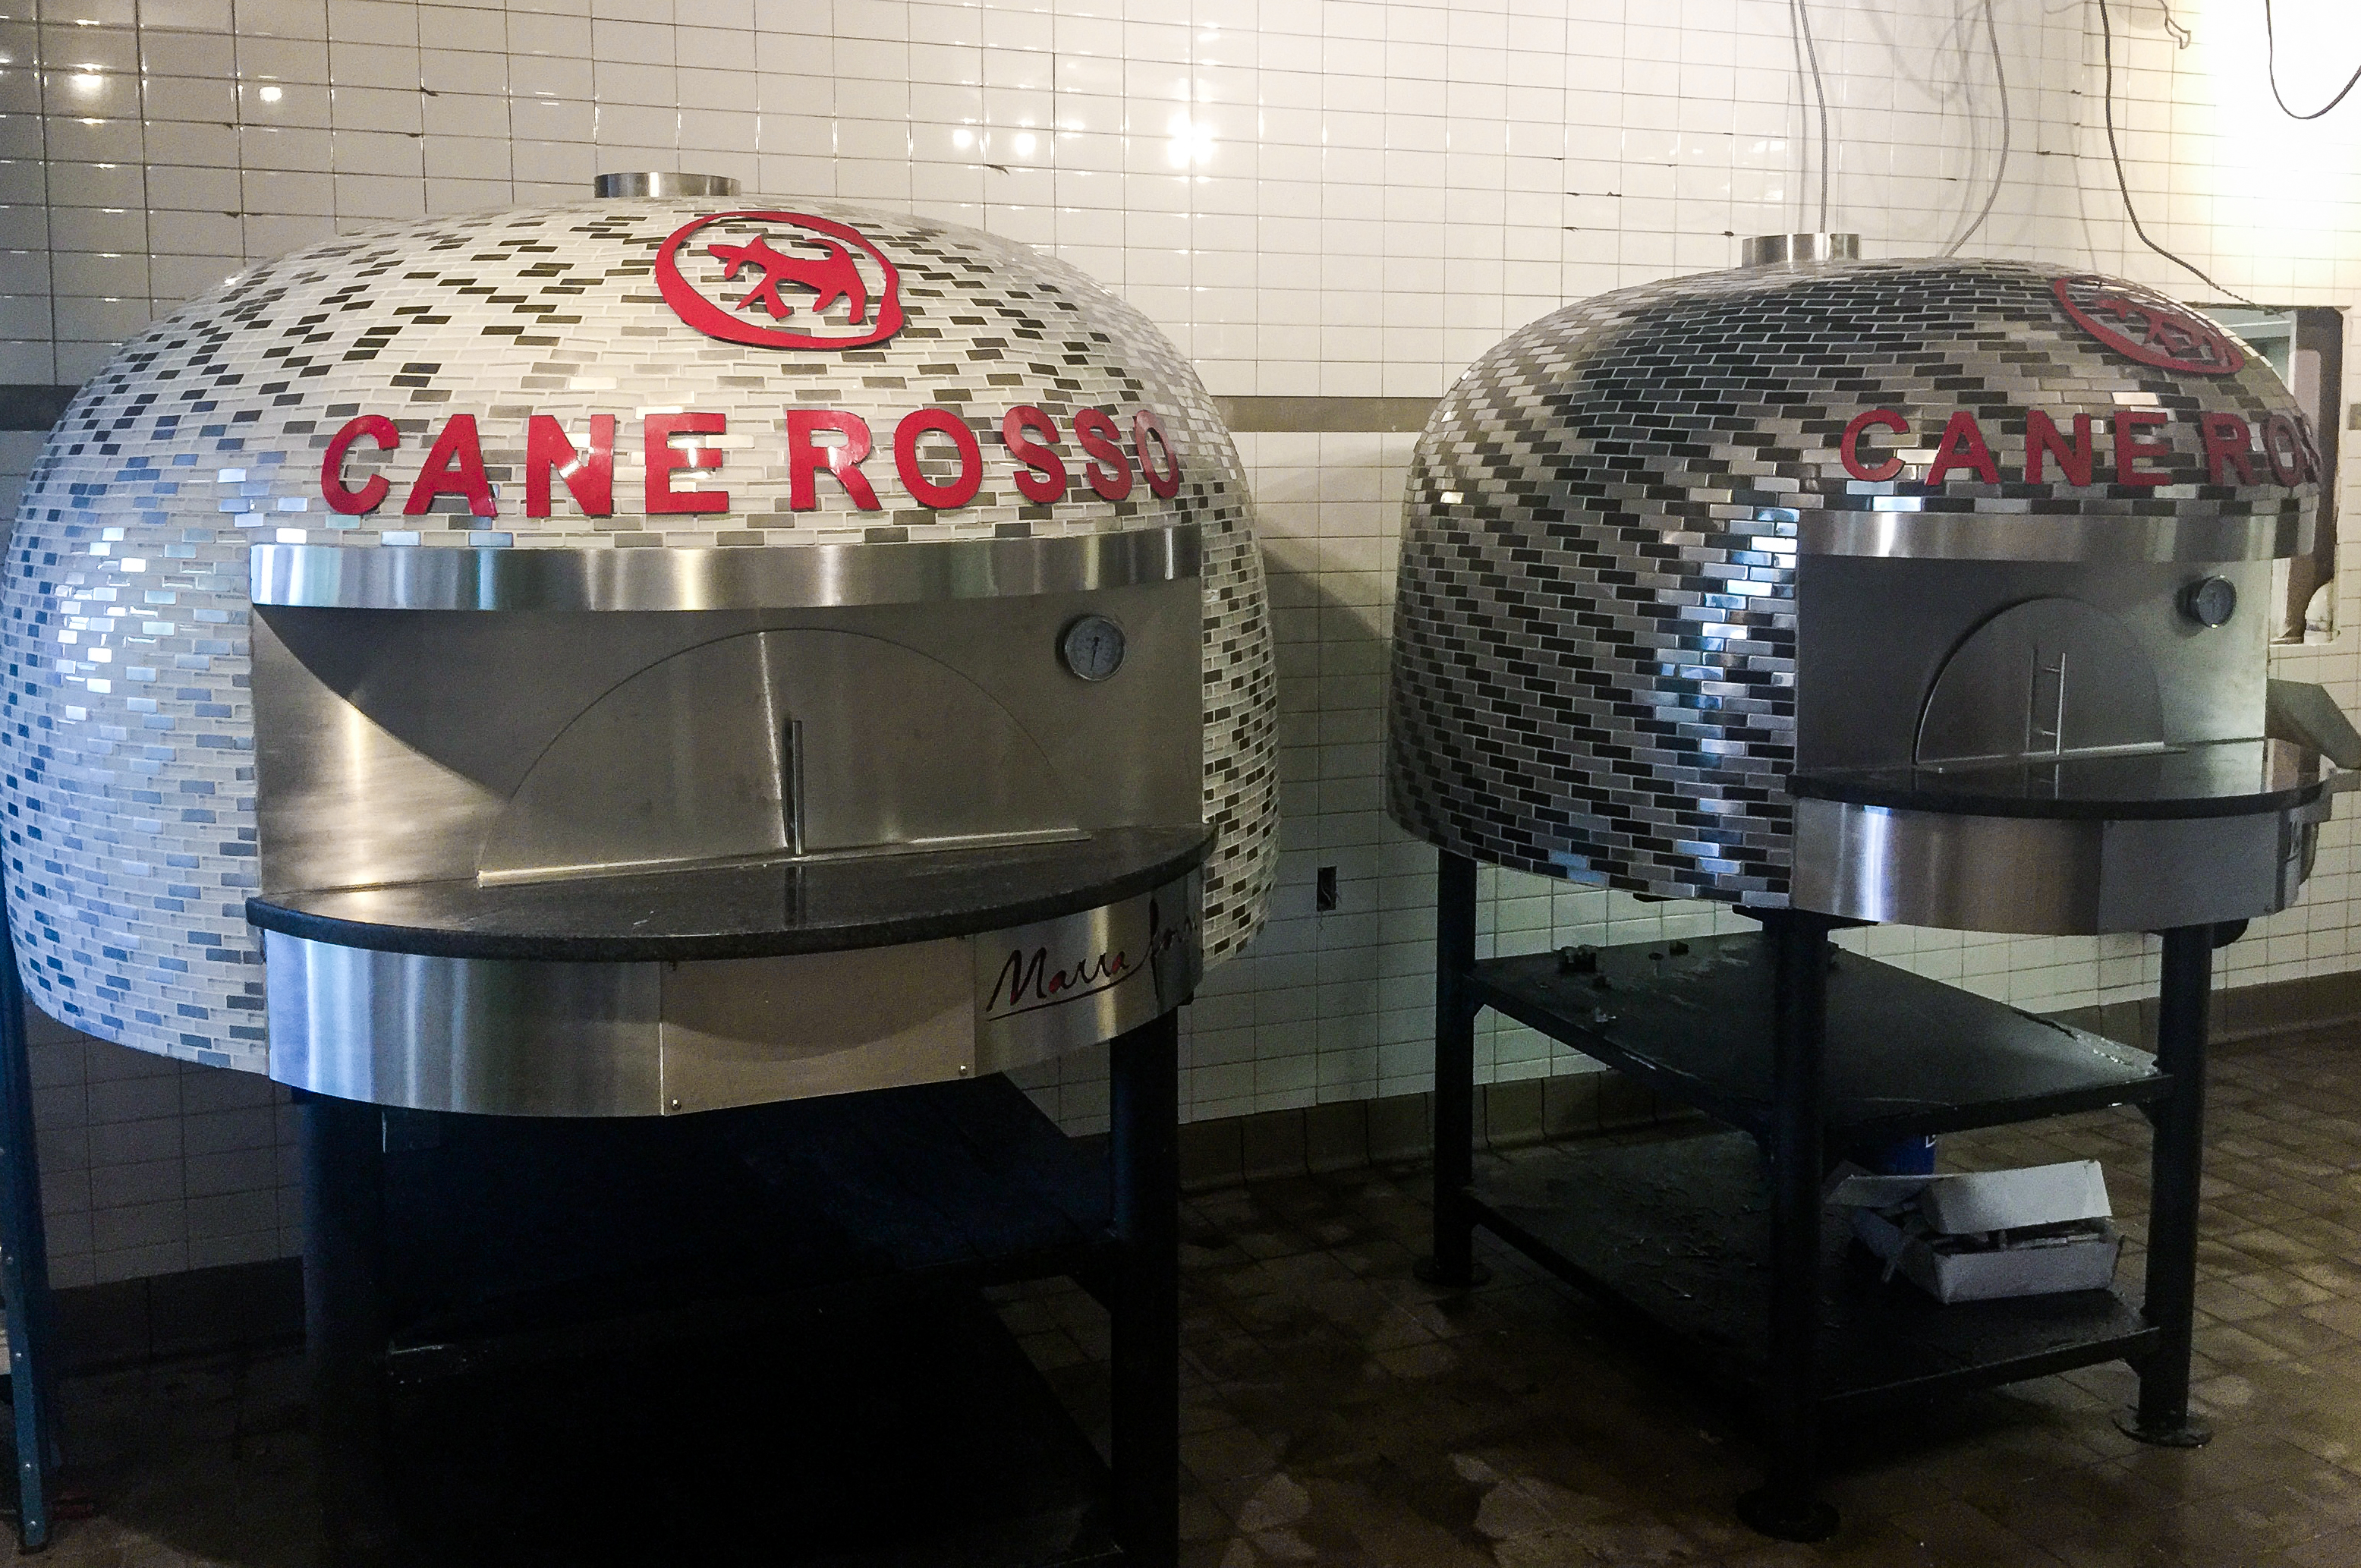 Cane Rosso's Austin pizza ovens